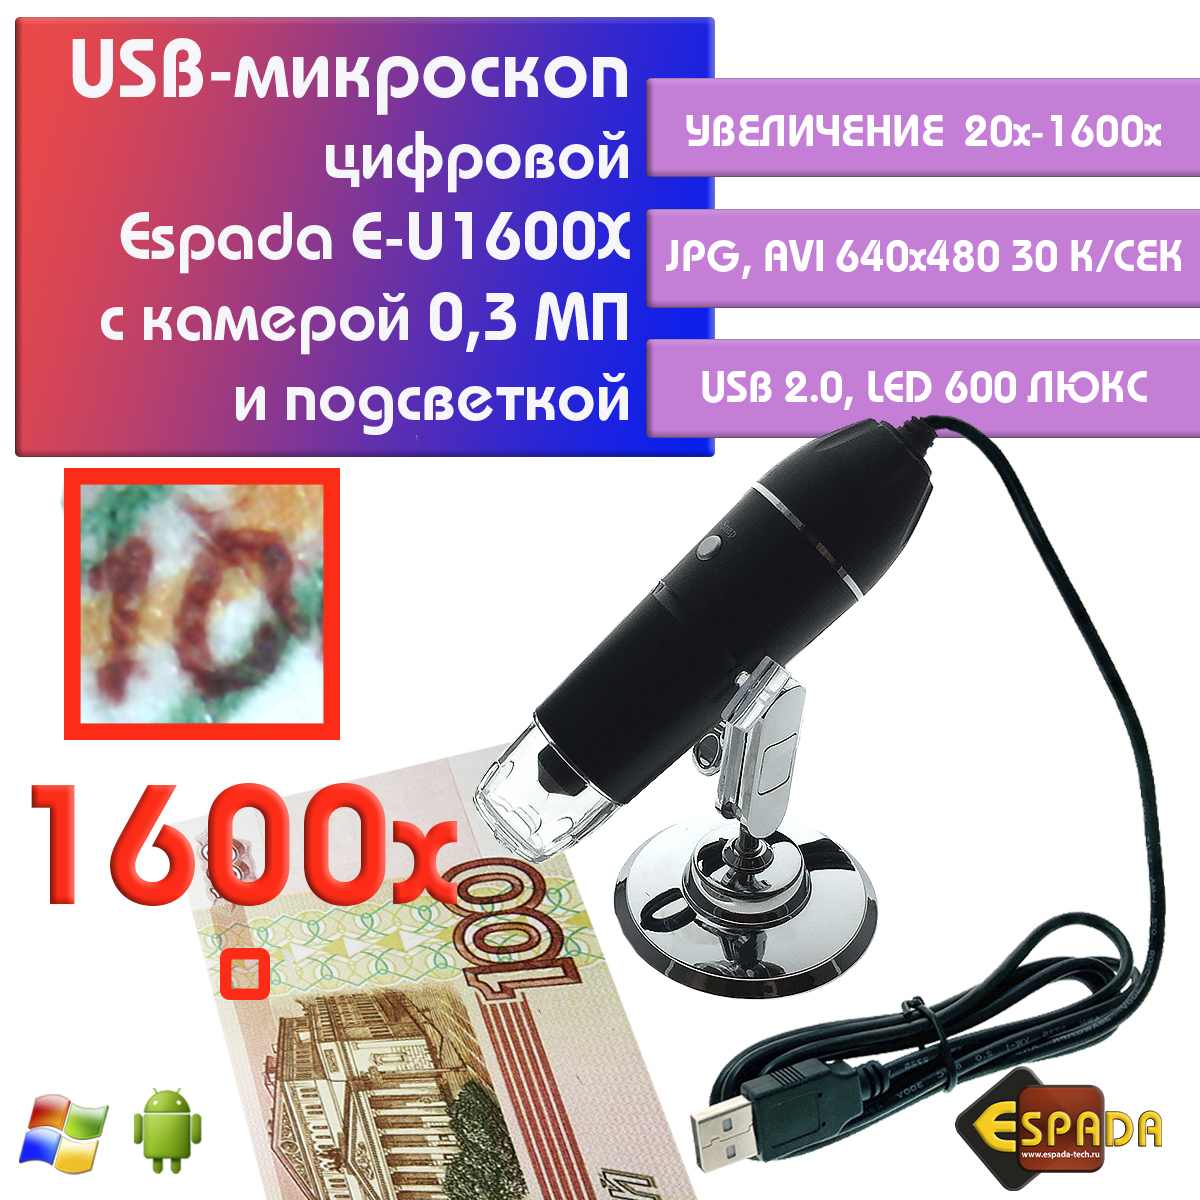 Портативный цифровой USB-микроскоп Espada E-U1600X c камерой 0,3 МП и увеличением 1600x видеокарта powercolor axrx 6700xt 12gbd6 3dhe oc amd